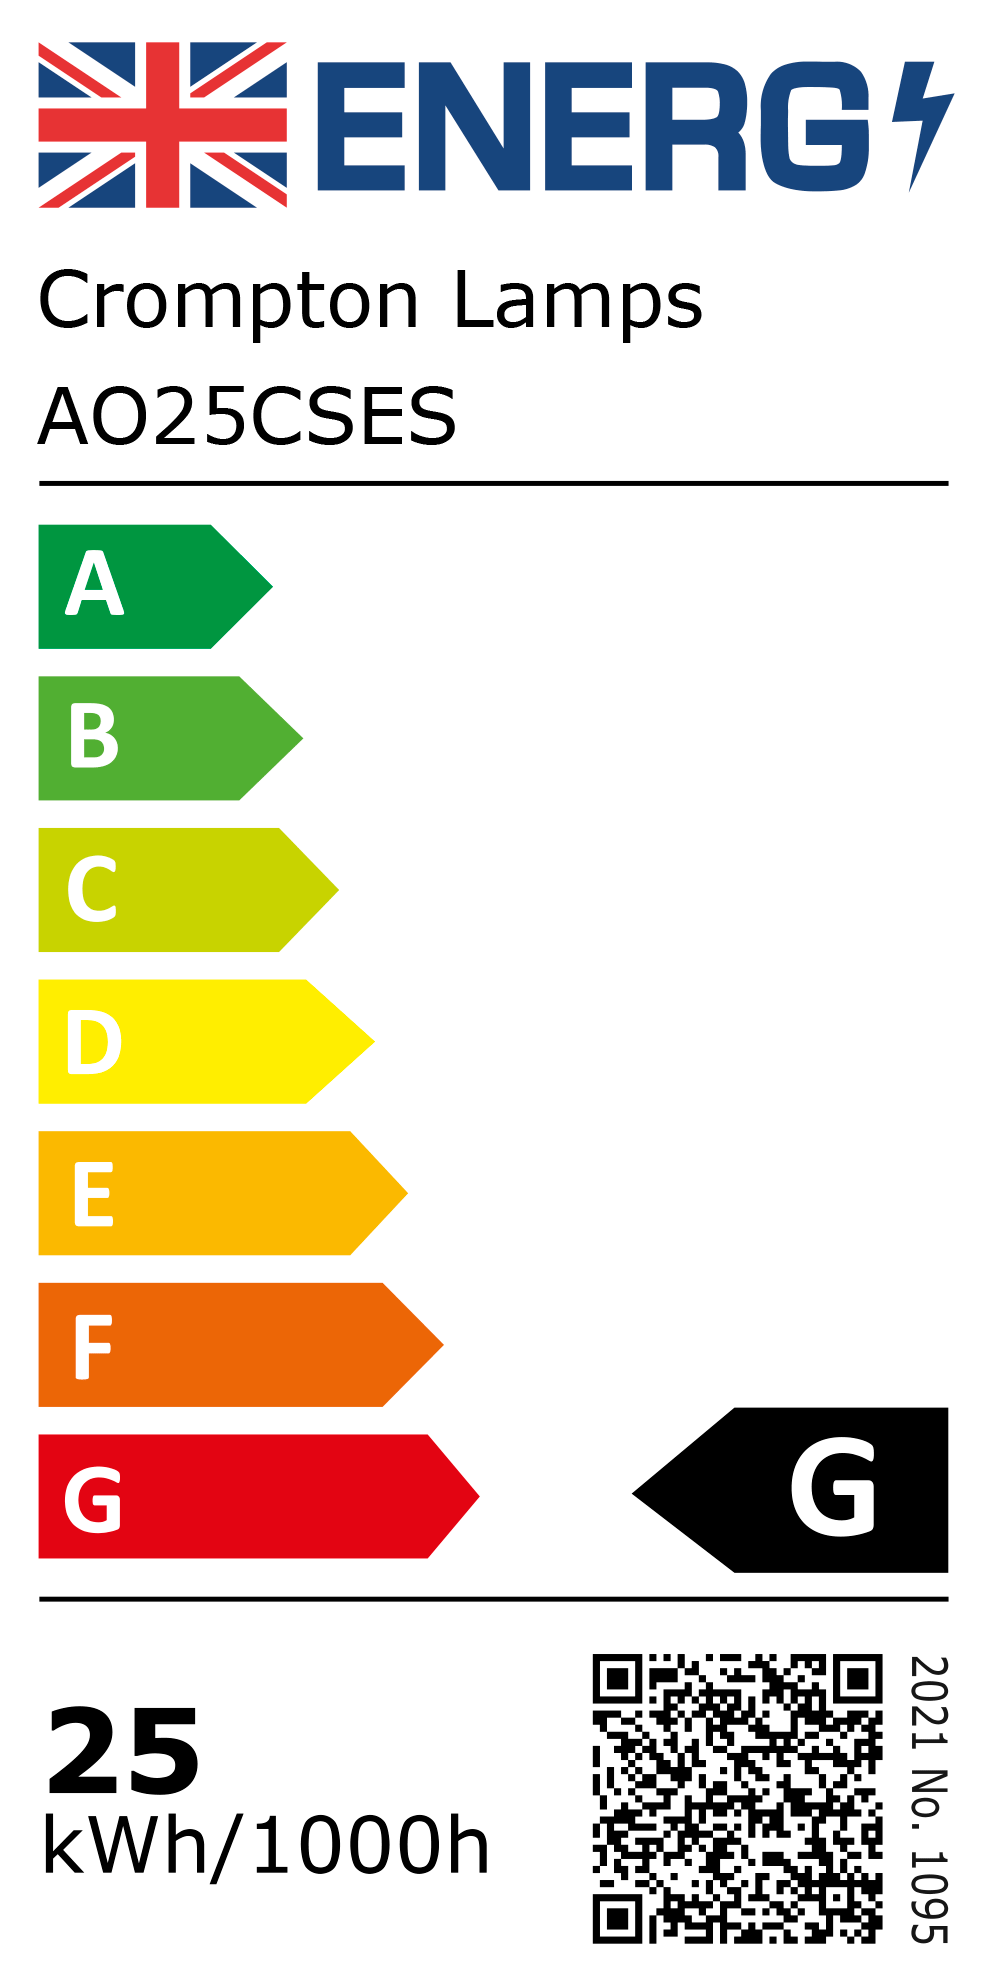 New 2021 Energy Rating Label: Stock Code AO25CSES